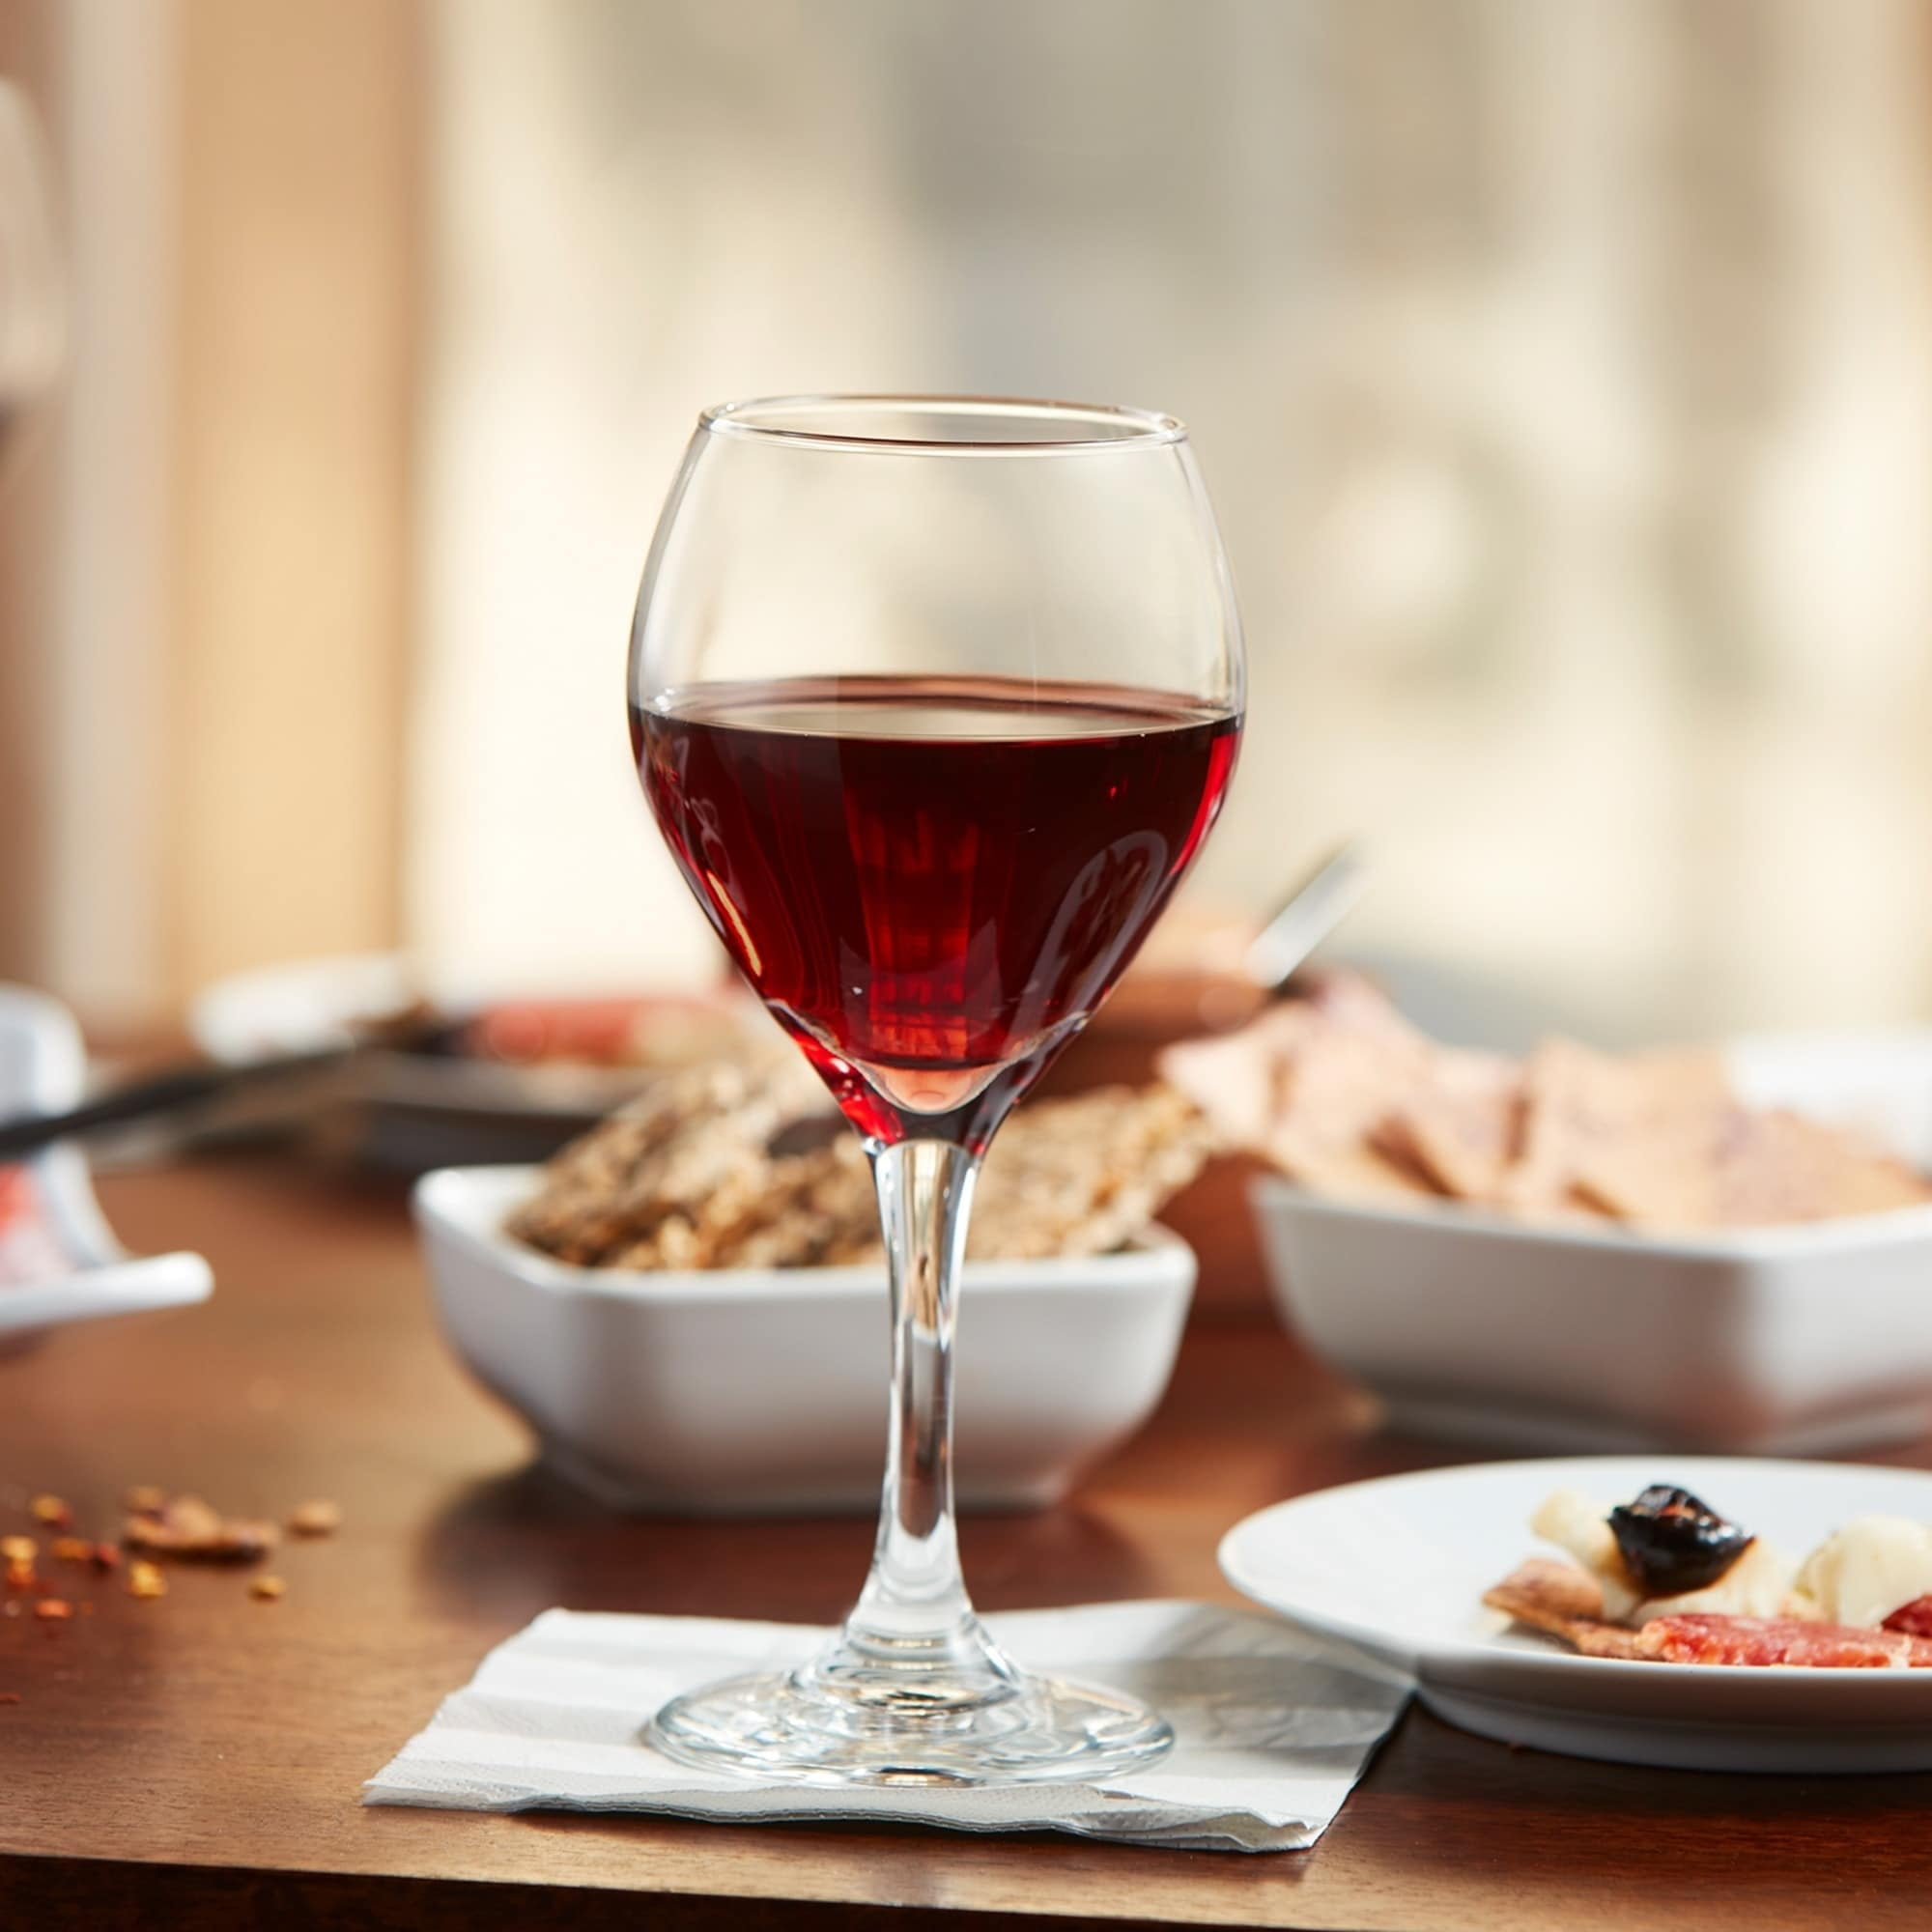 Libbey Classic Wine 4-Piece Glassware Set